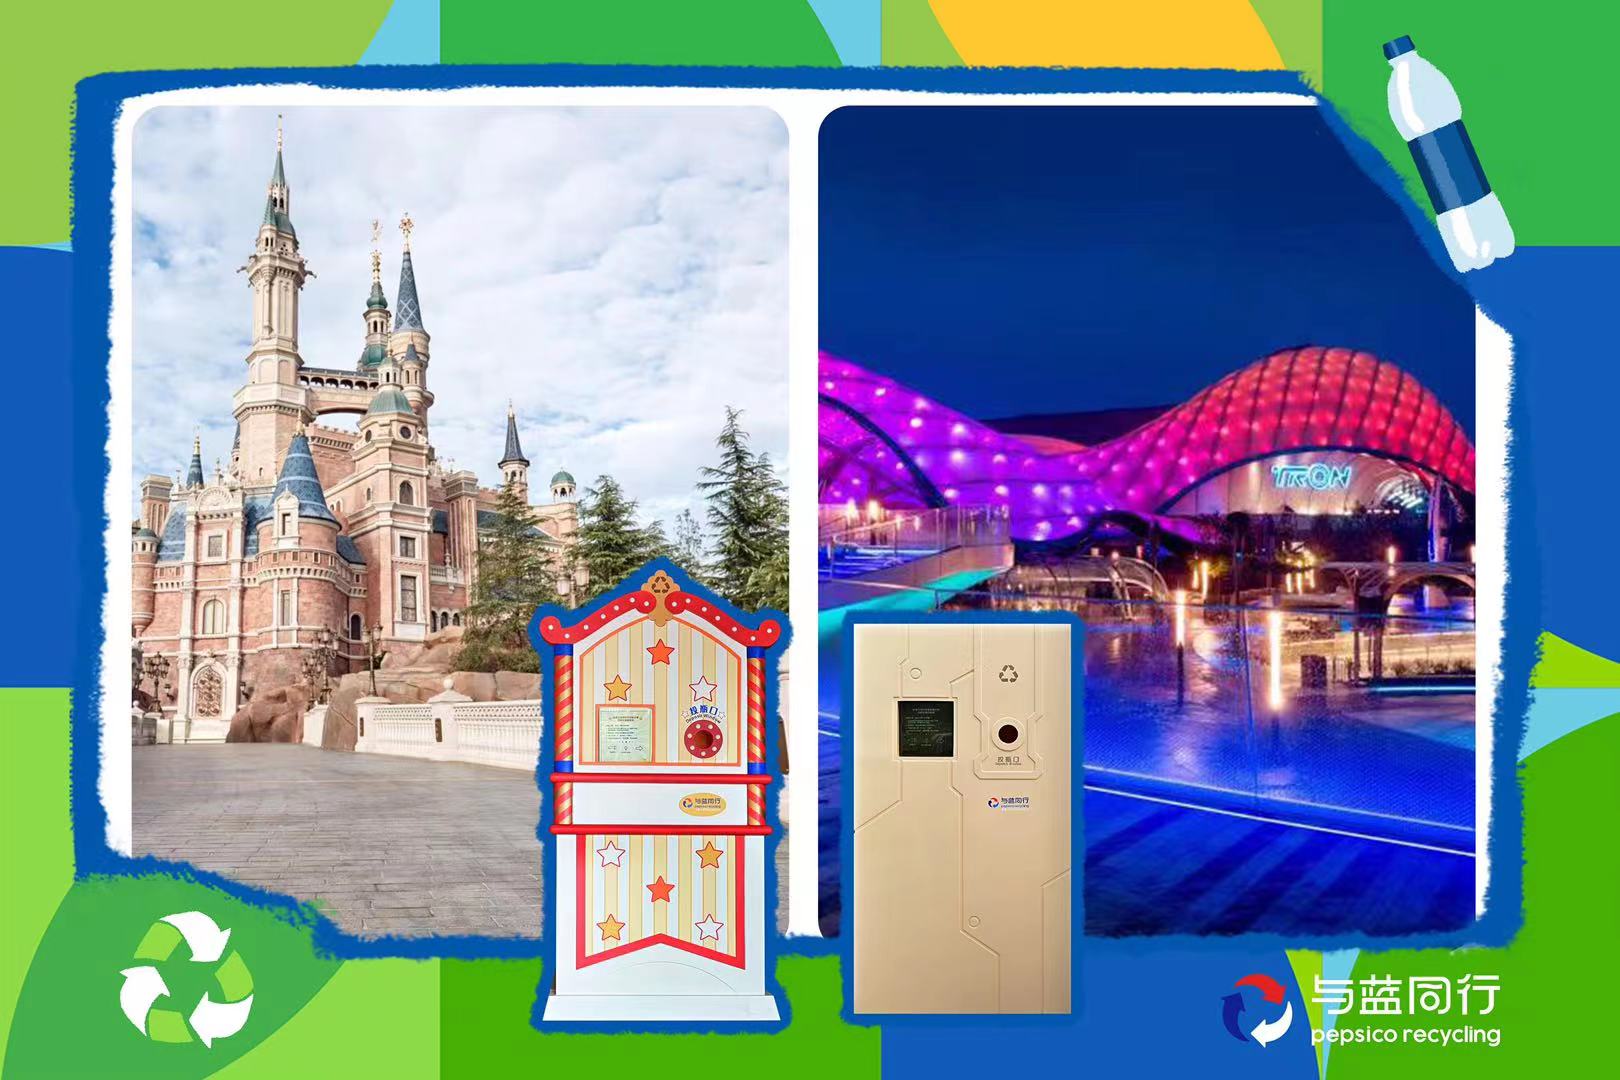 PepsiCo Install PET Recycling Machines at Shanghai Disney Resort